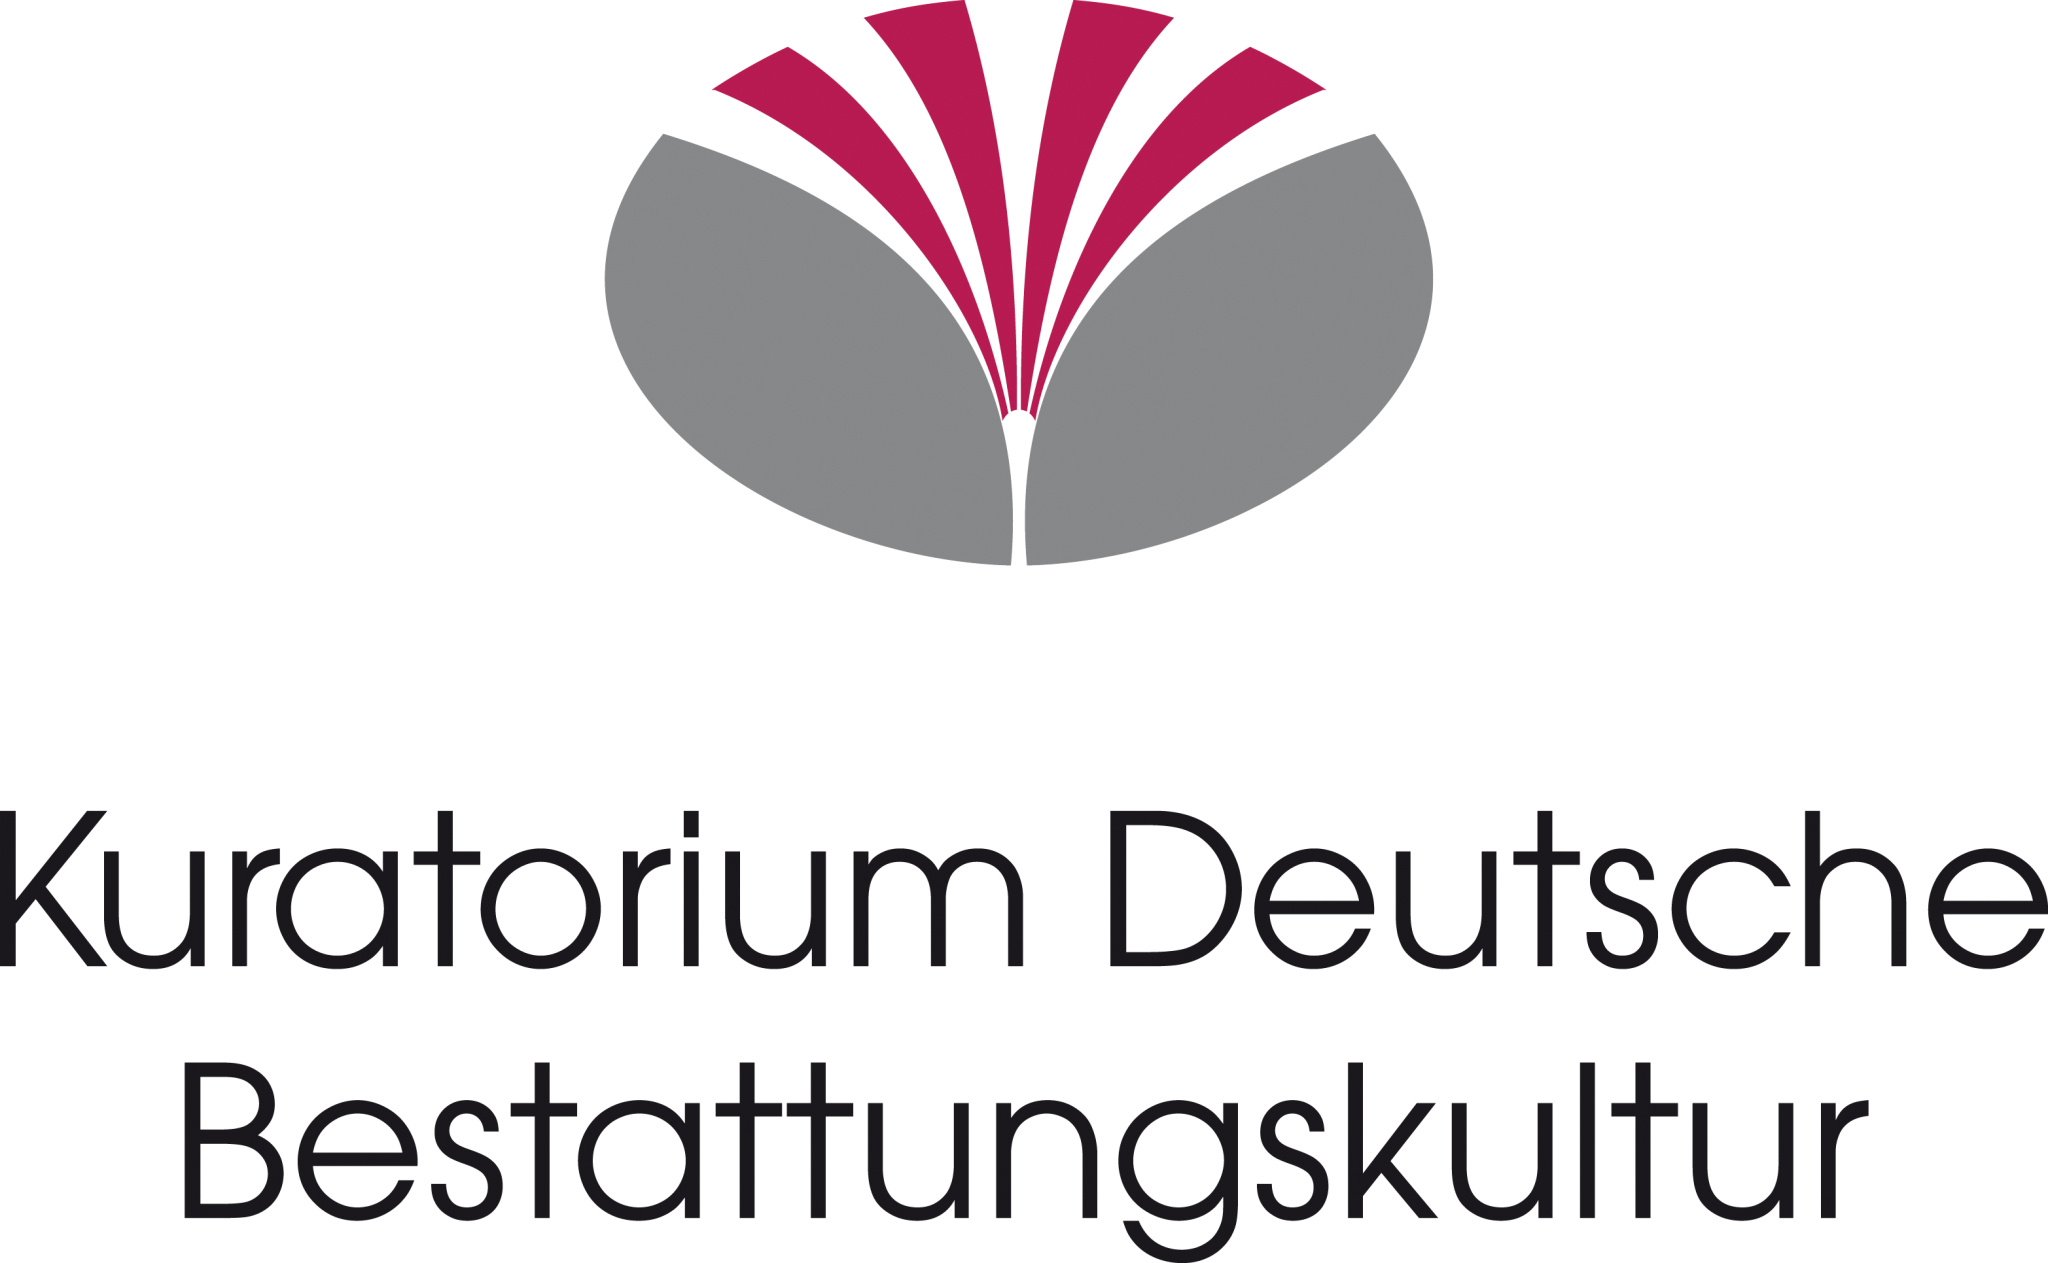 Kuratorium Deutsche Bestattungskultur Logo